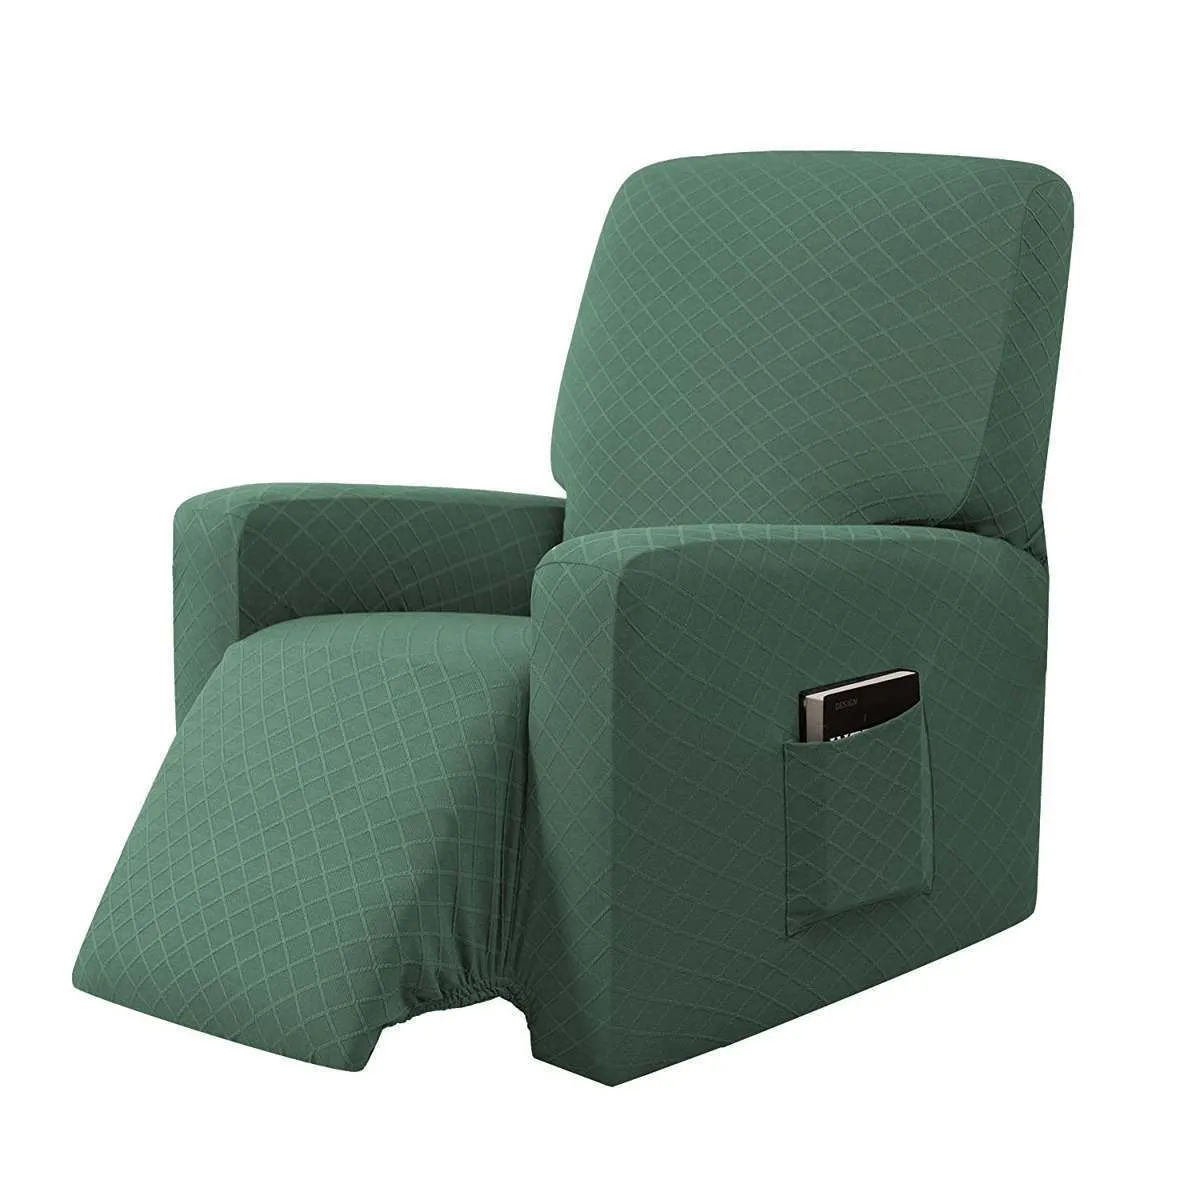 Stretch Elastic Recliner Sofabezug Rutschfester abnehmbarer und waschbarer elektrischer Sesselbezug Recliner Chair Slipcover 201119